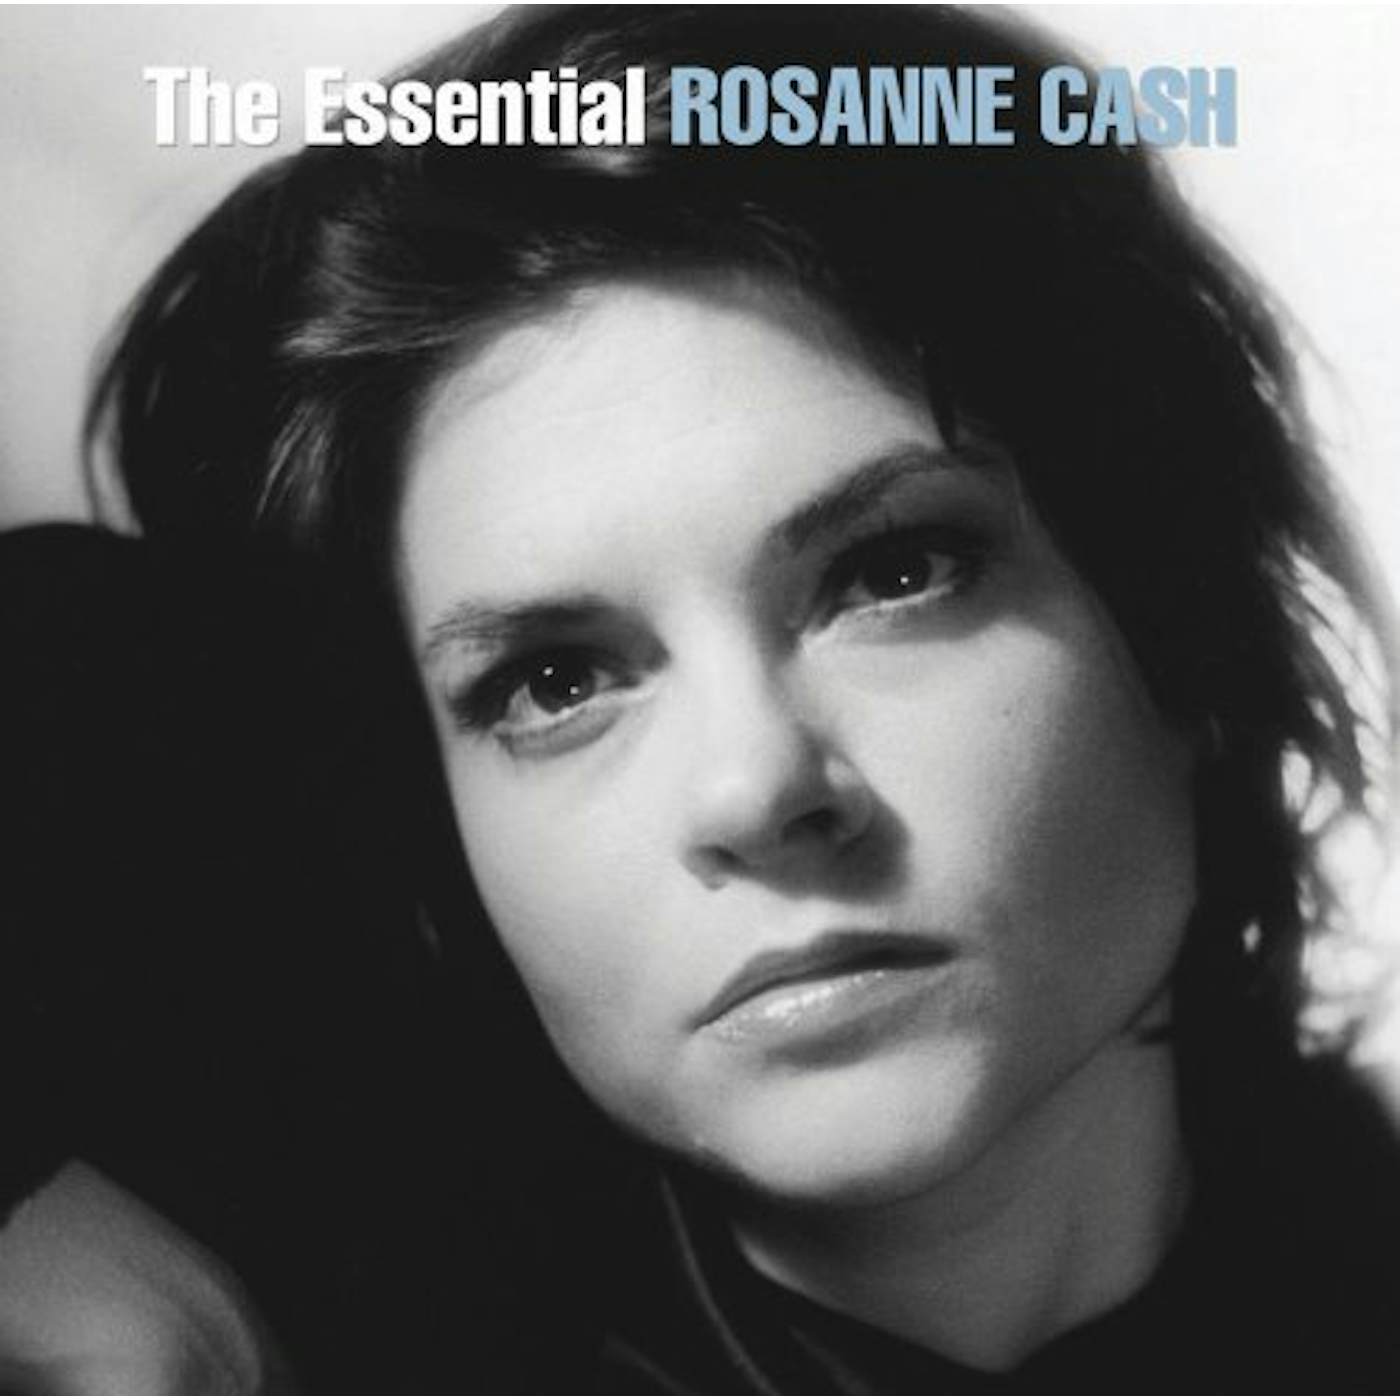 ESSENTIAL ROSANNE CASH CD